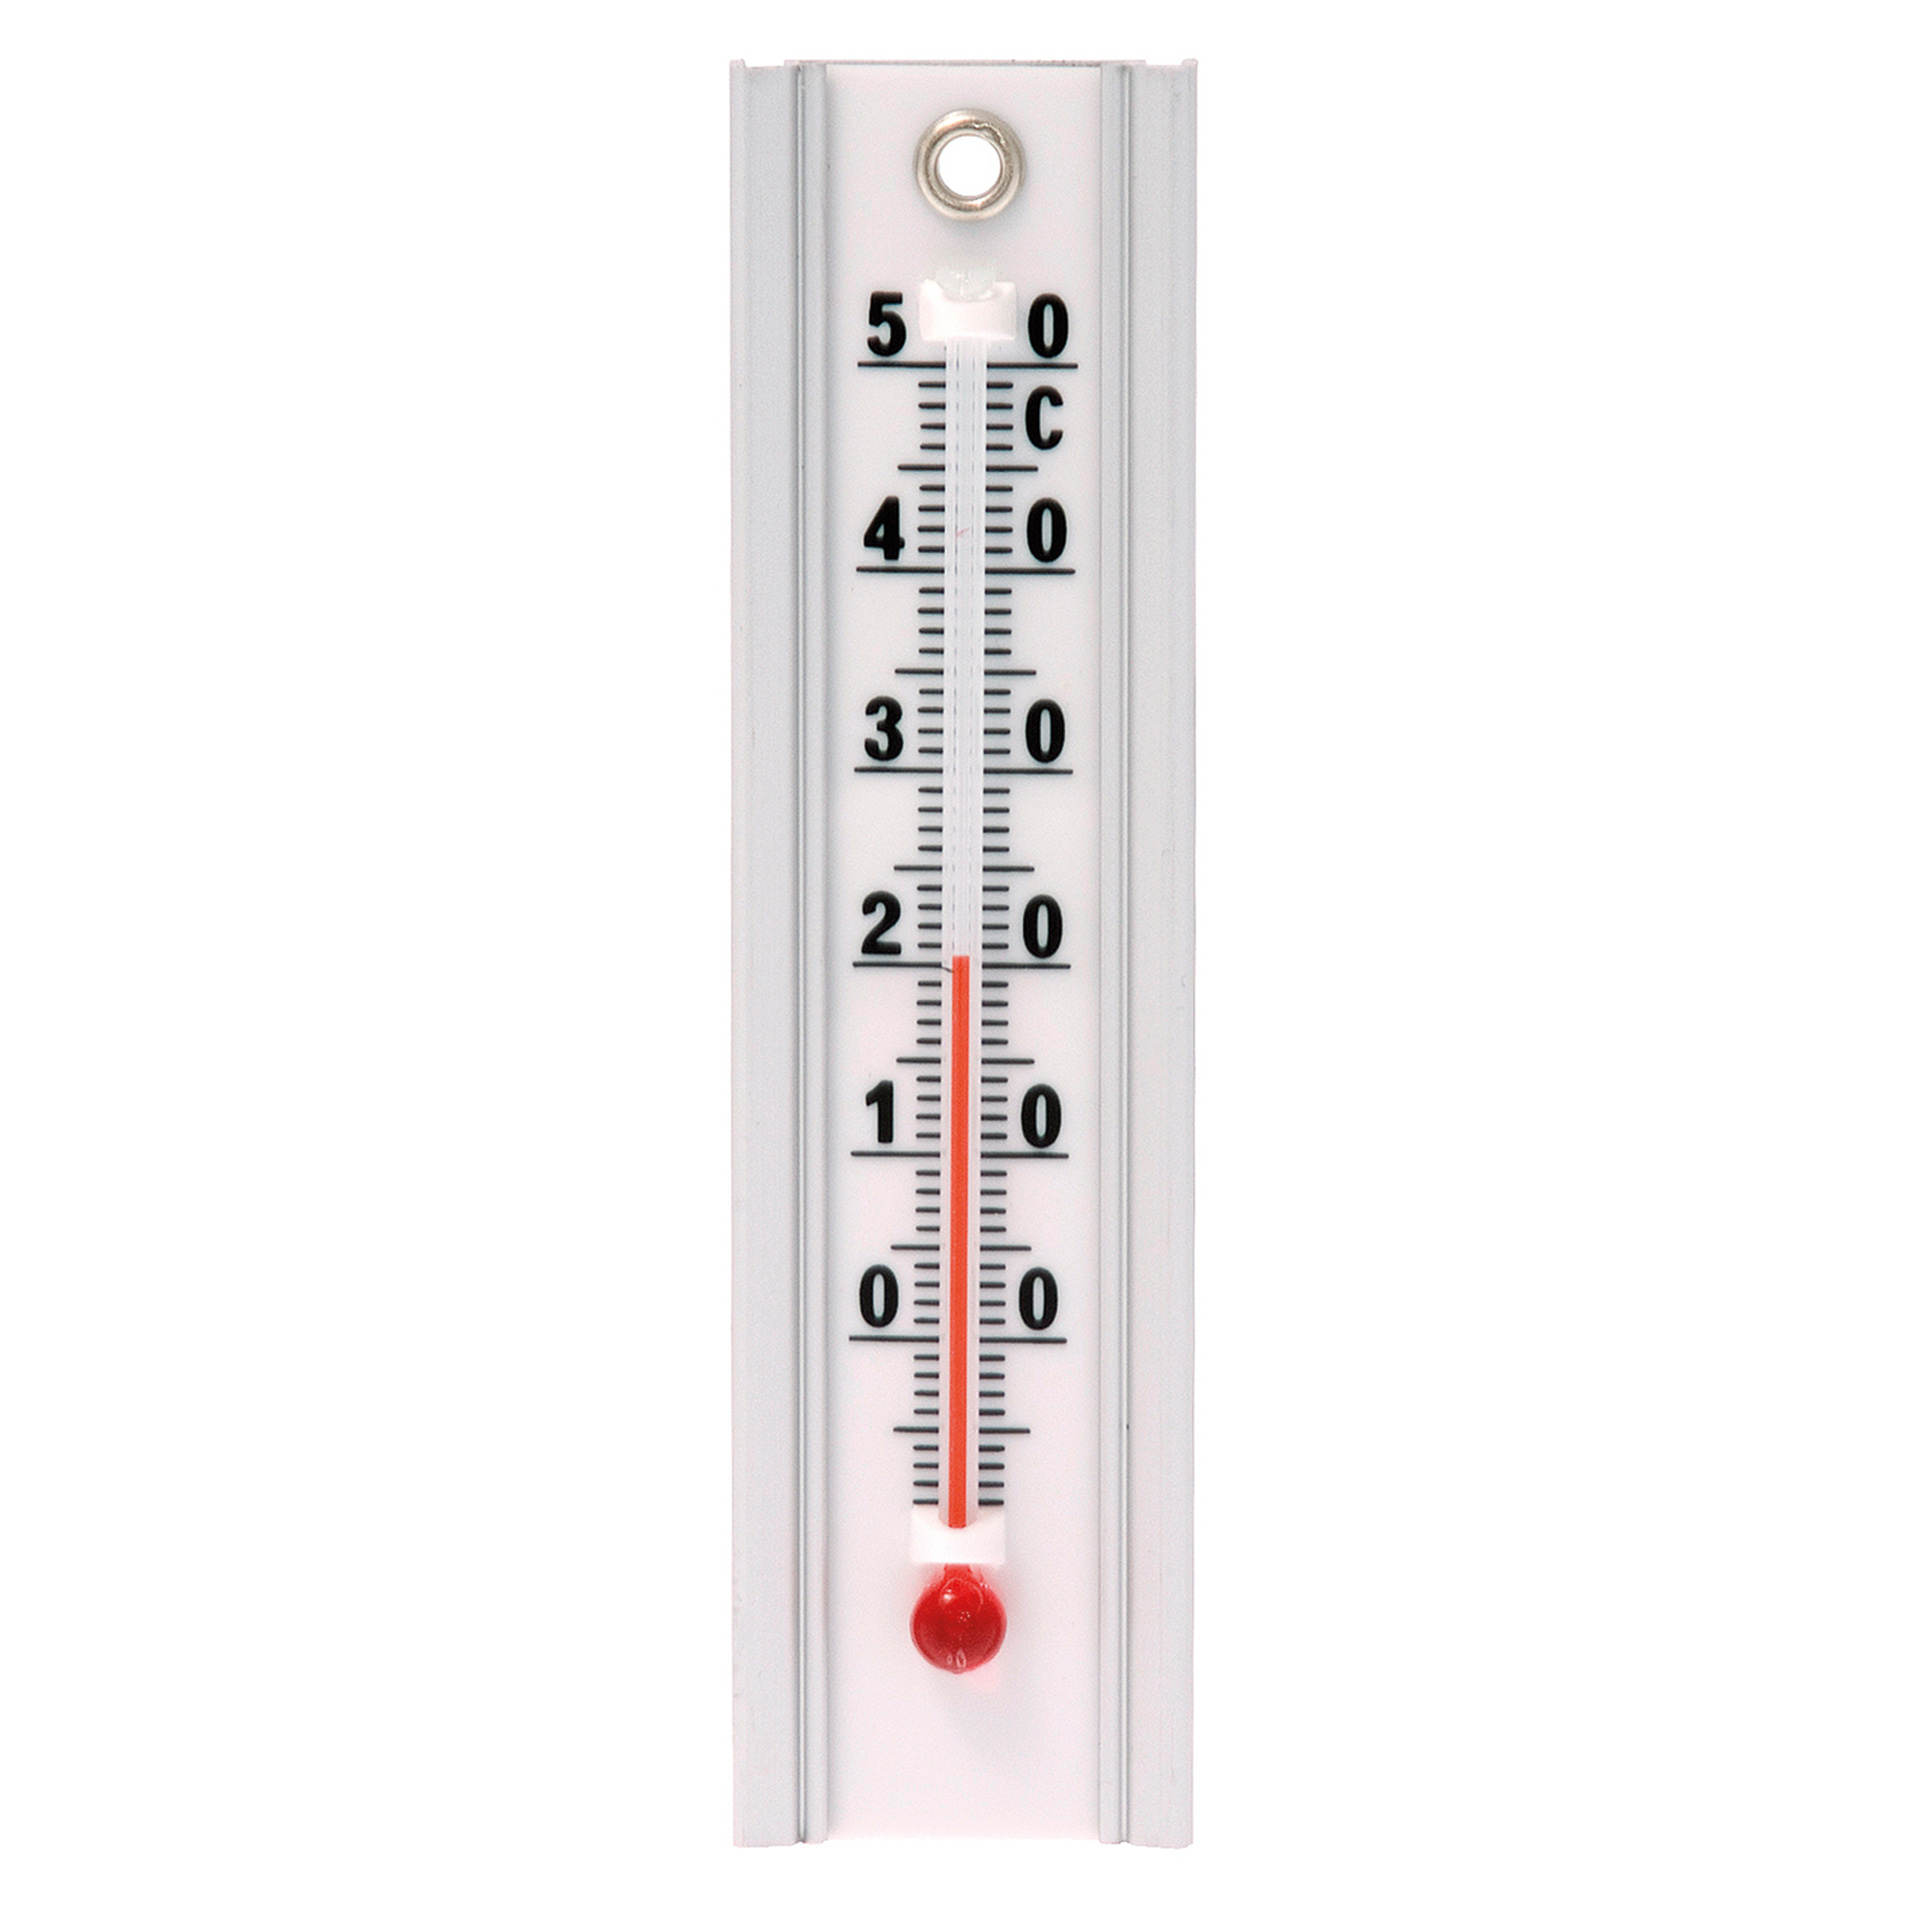 Термометр воздуха цена. Термометр. Термометр для помещения. Термометр комнатный. Термометр для измерения температуры воздуха в помещении.